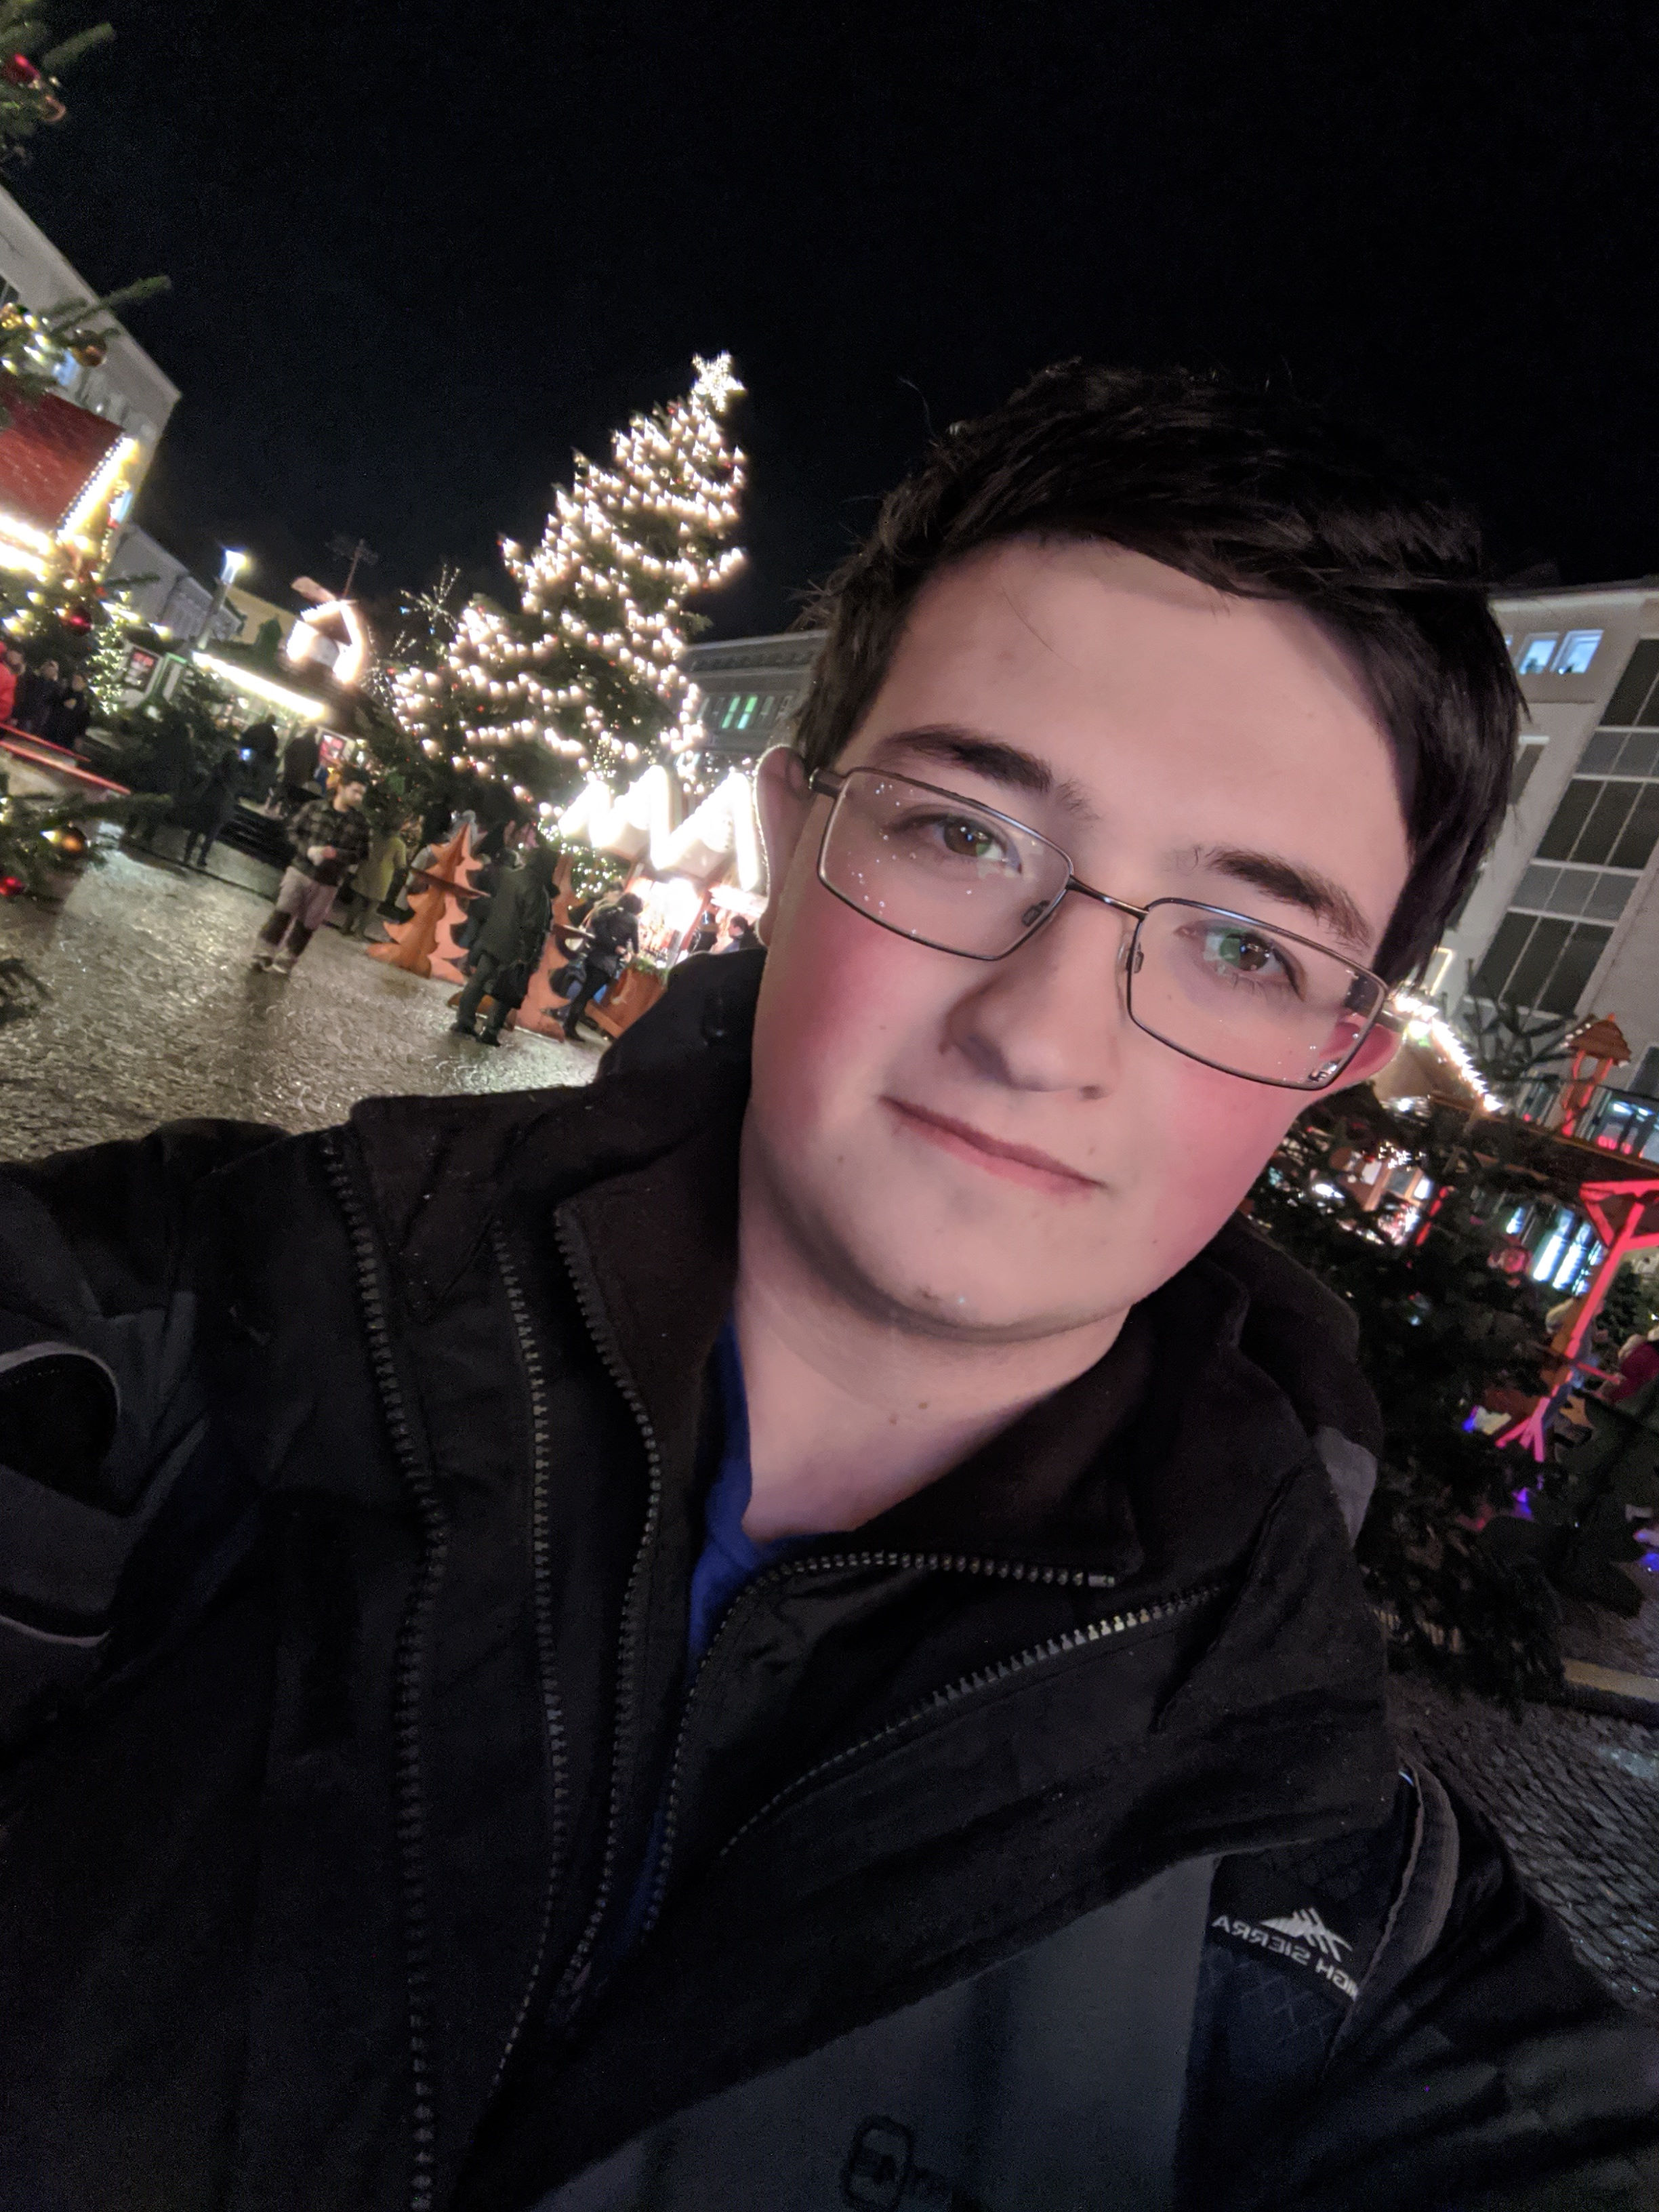 Ben Photo, Berlin 
Christmas Market 2019